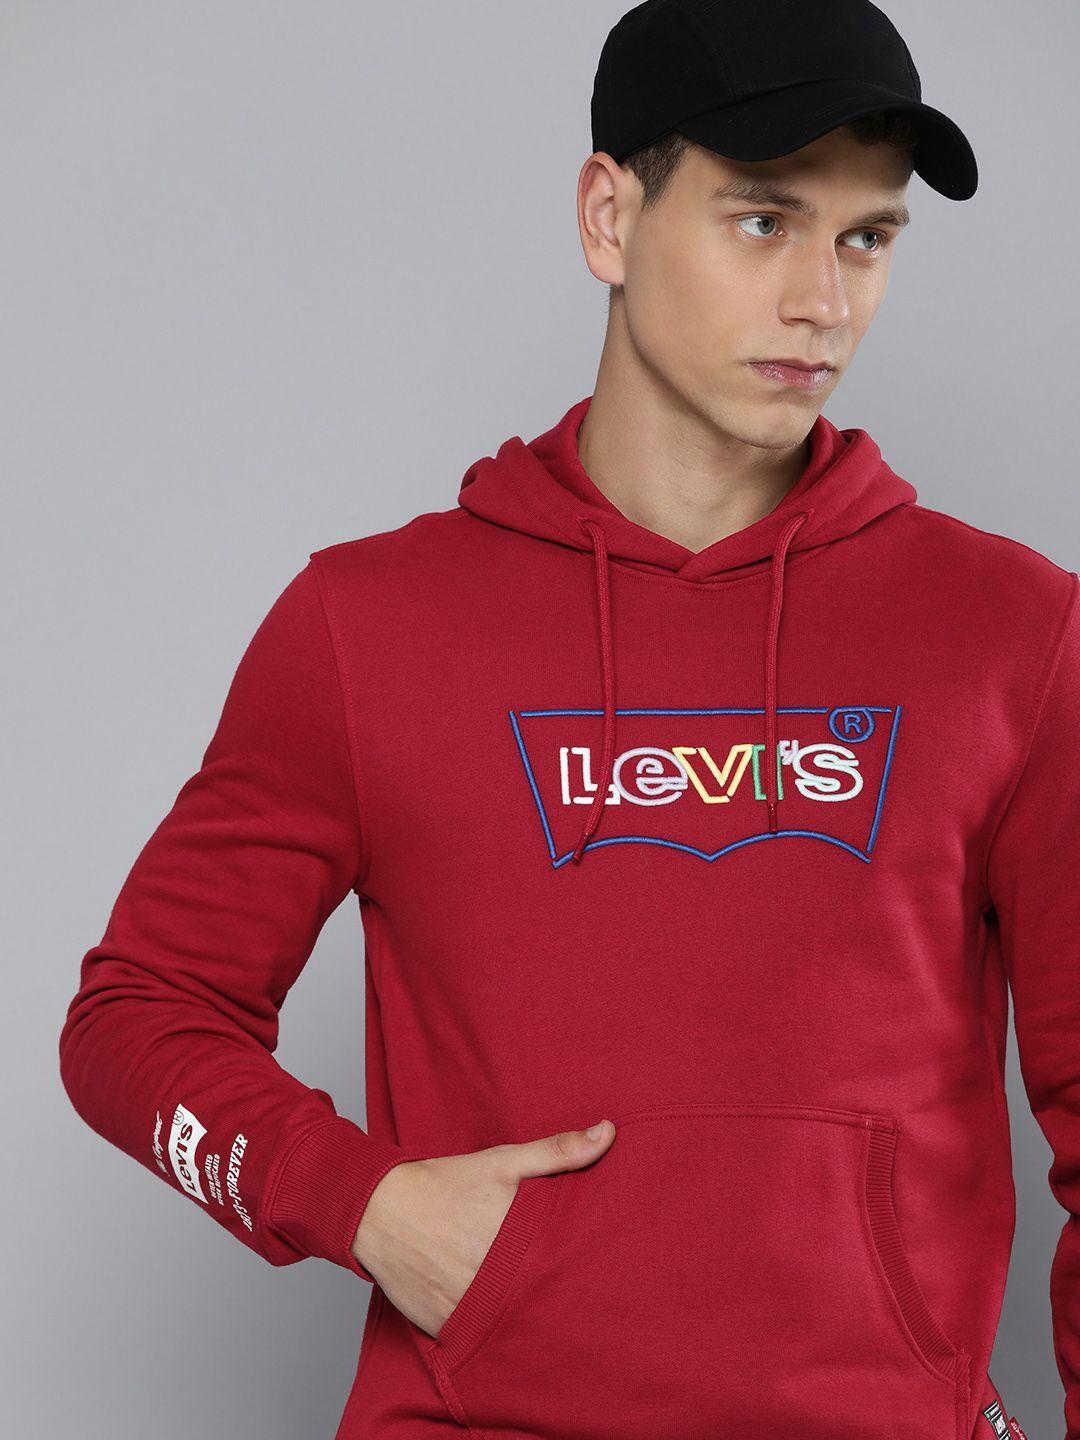 levis brand logo embroidered hooded sweatshirt